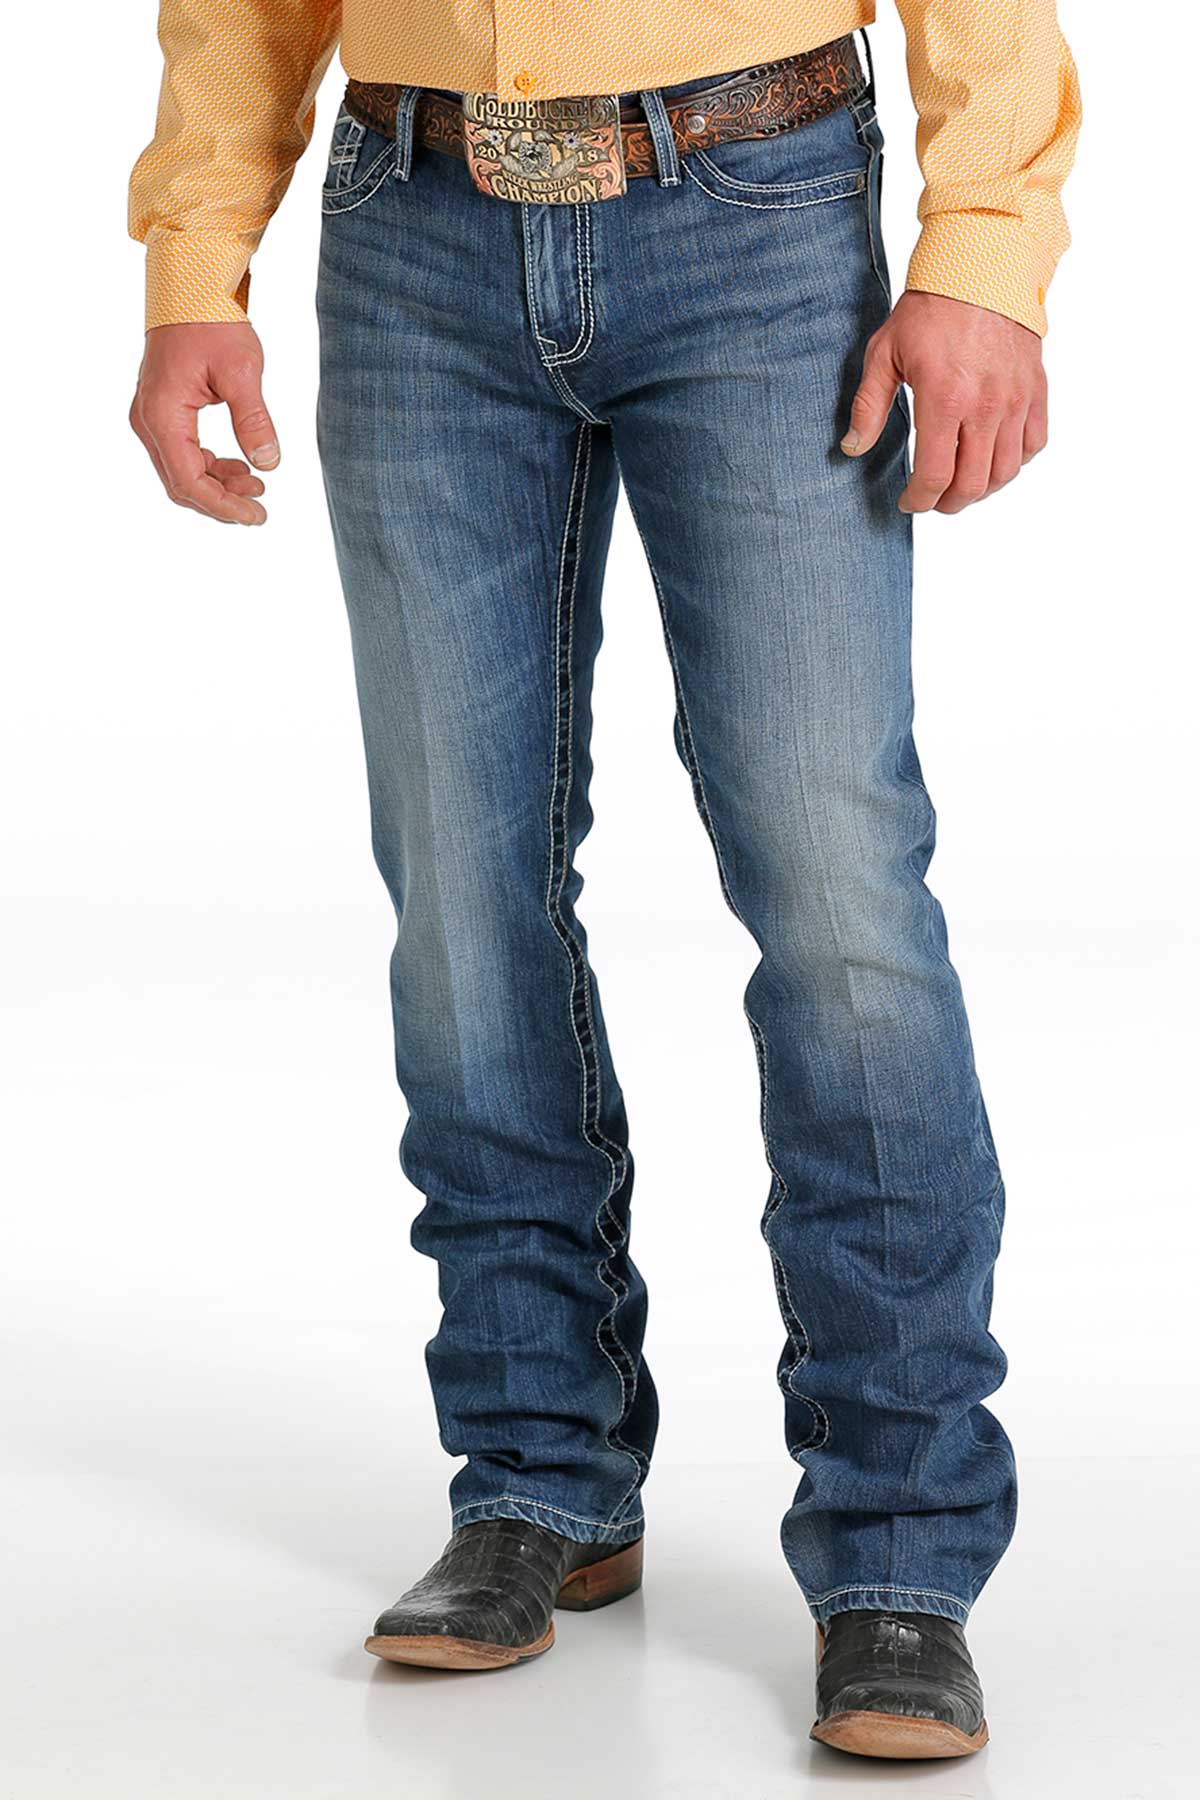 Cinch Jeans  Men's Slim Fit Silver Label Jean - Medium Stonewash